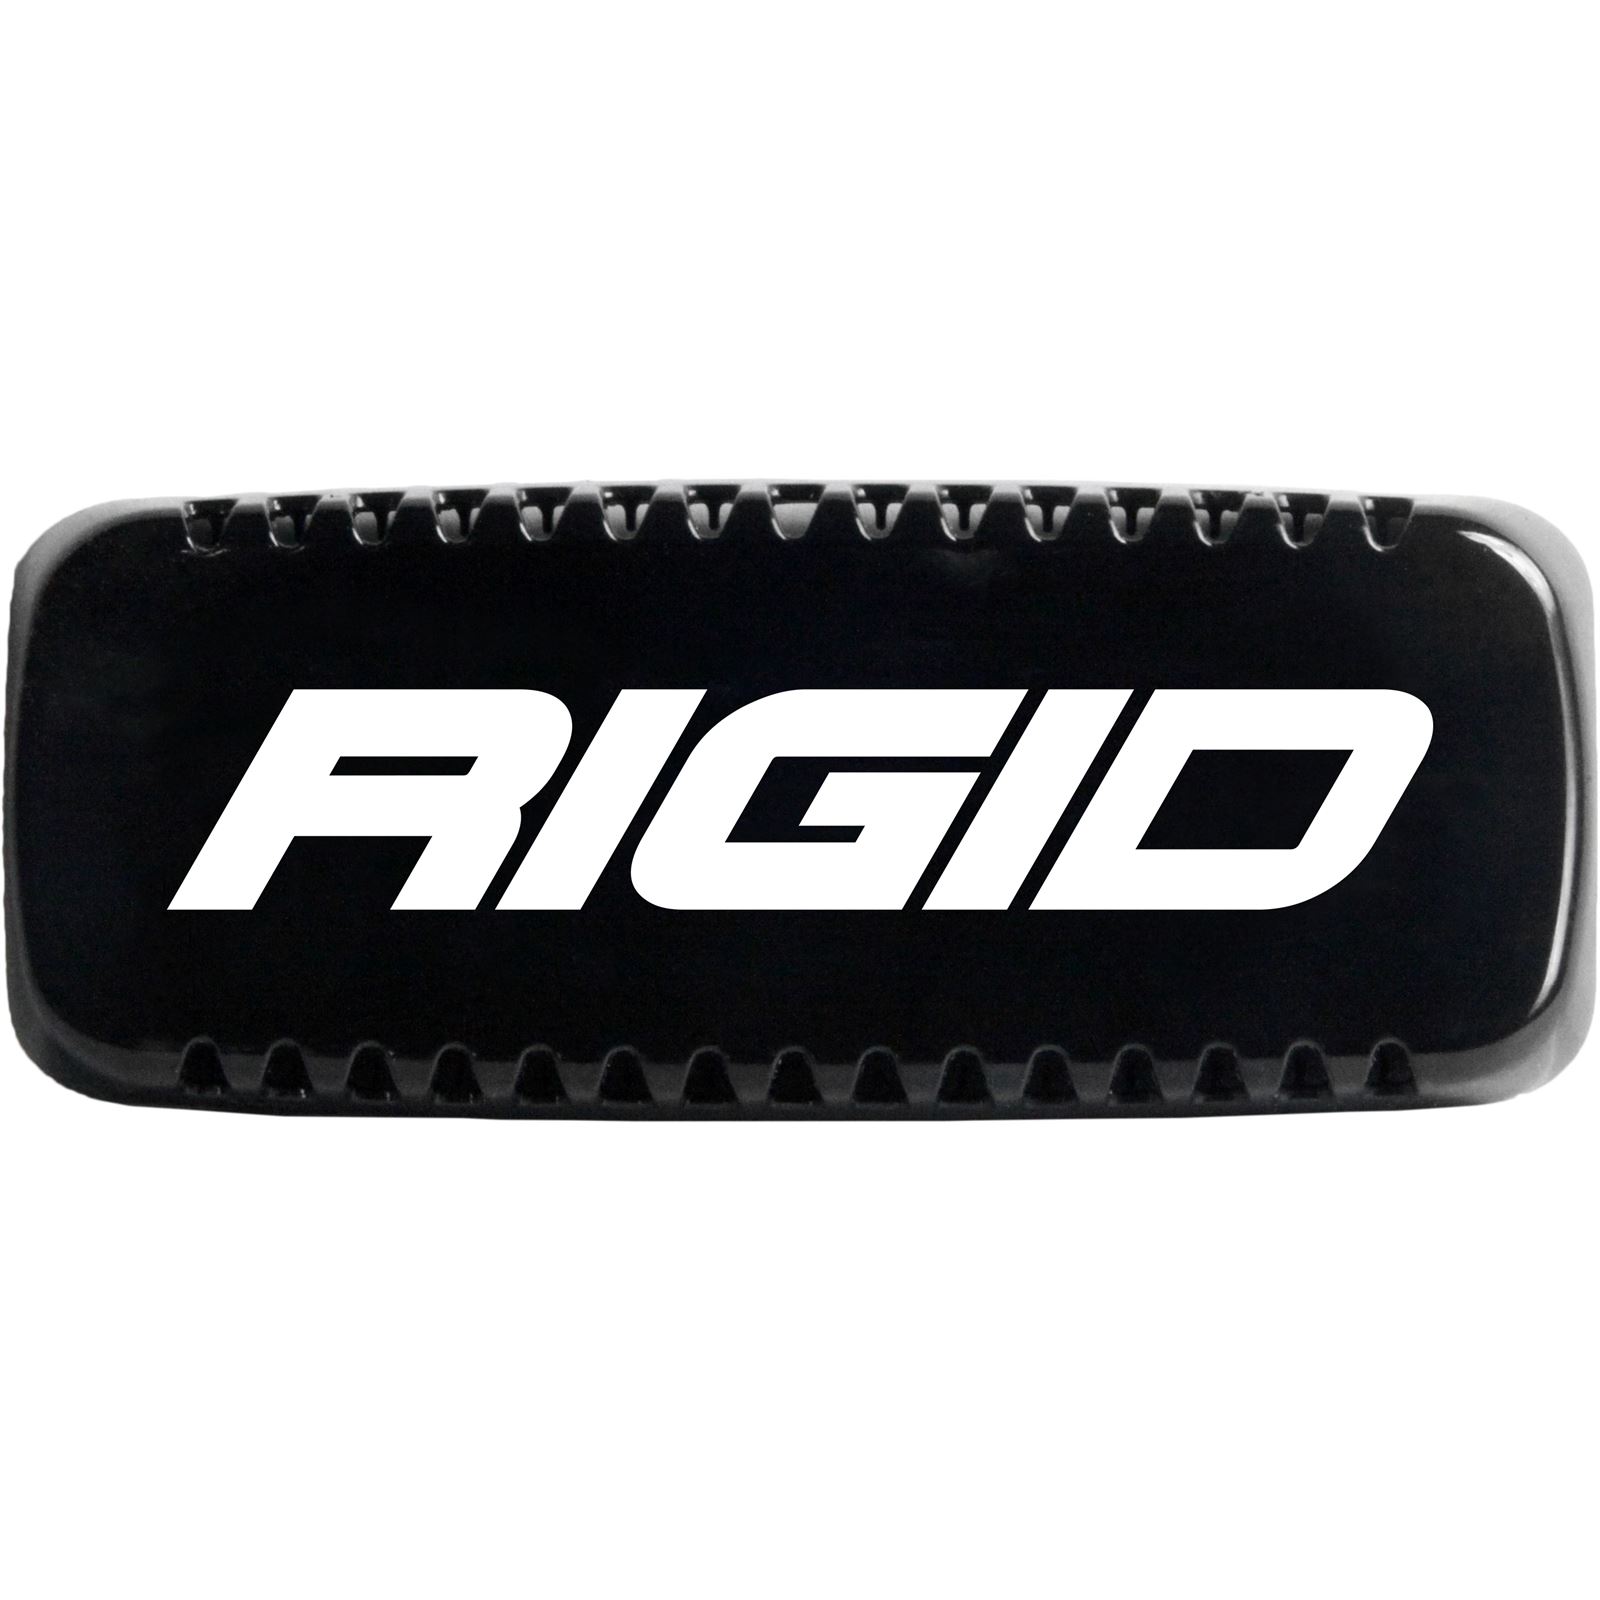 Rigid SR-Q Series Light Cover